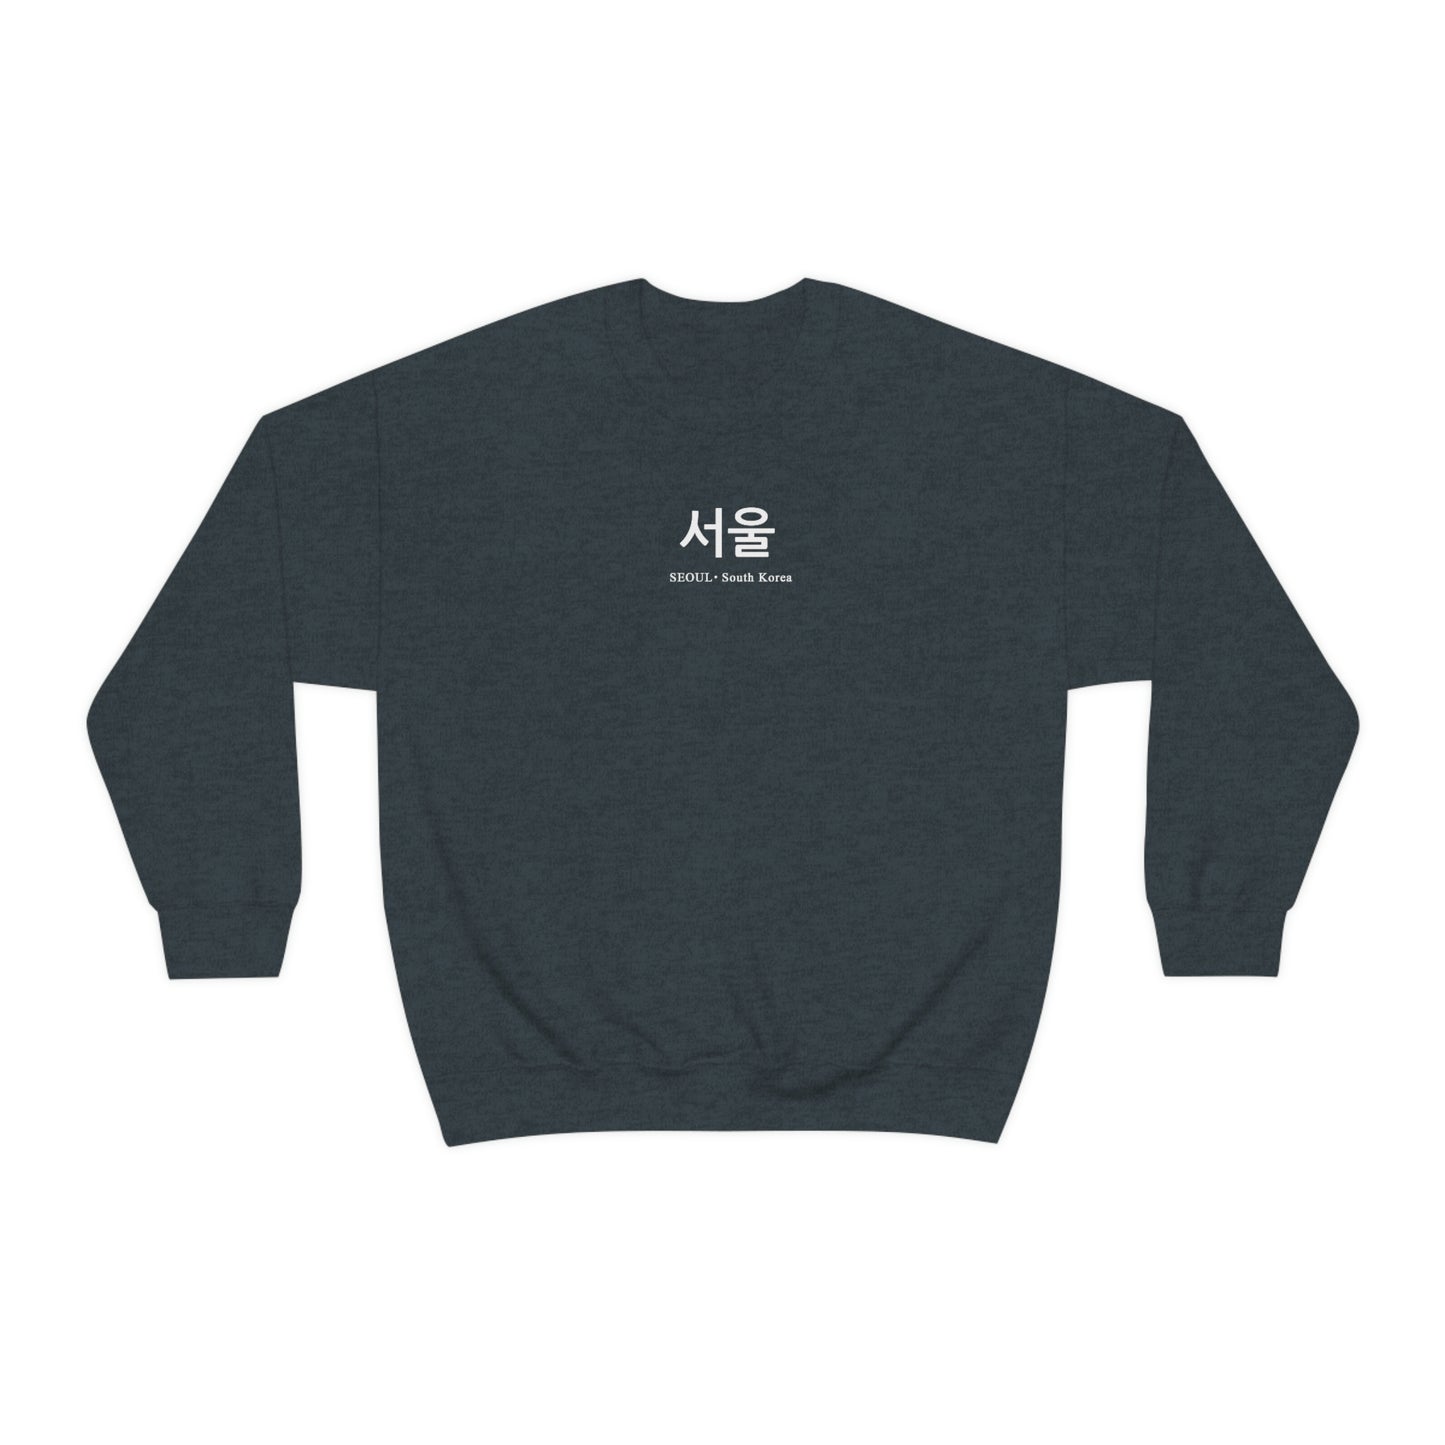 Seoul Sweatshirt Korean University Kawaii Style Kpop Oversize Cute City Aesthetic Gift Sweatshirt minimal minimalist Sweater crewneck